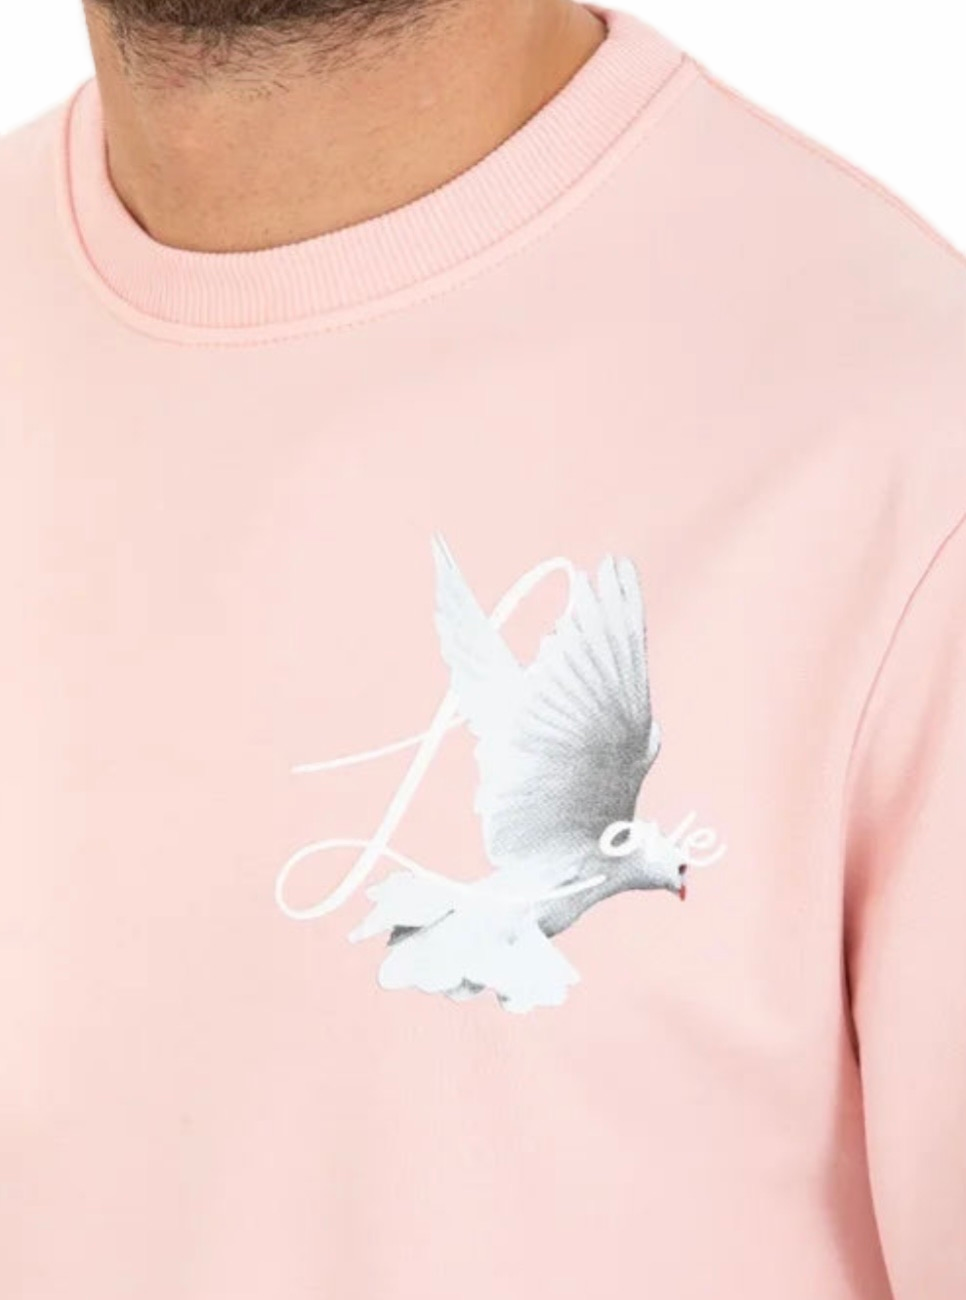 Liefdes Duif Sweater - Roze